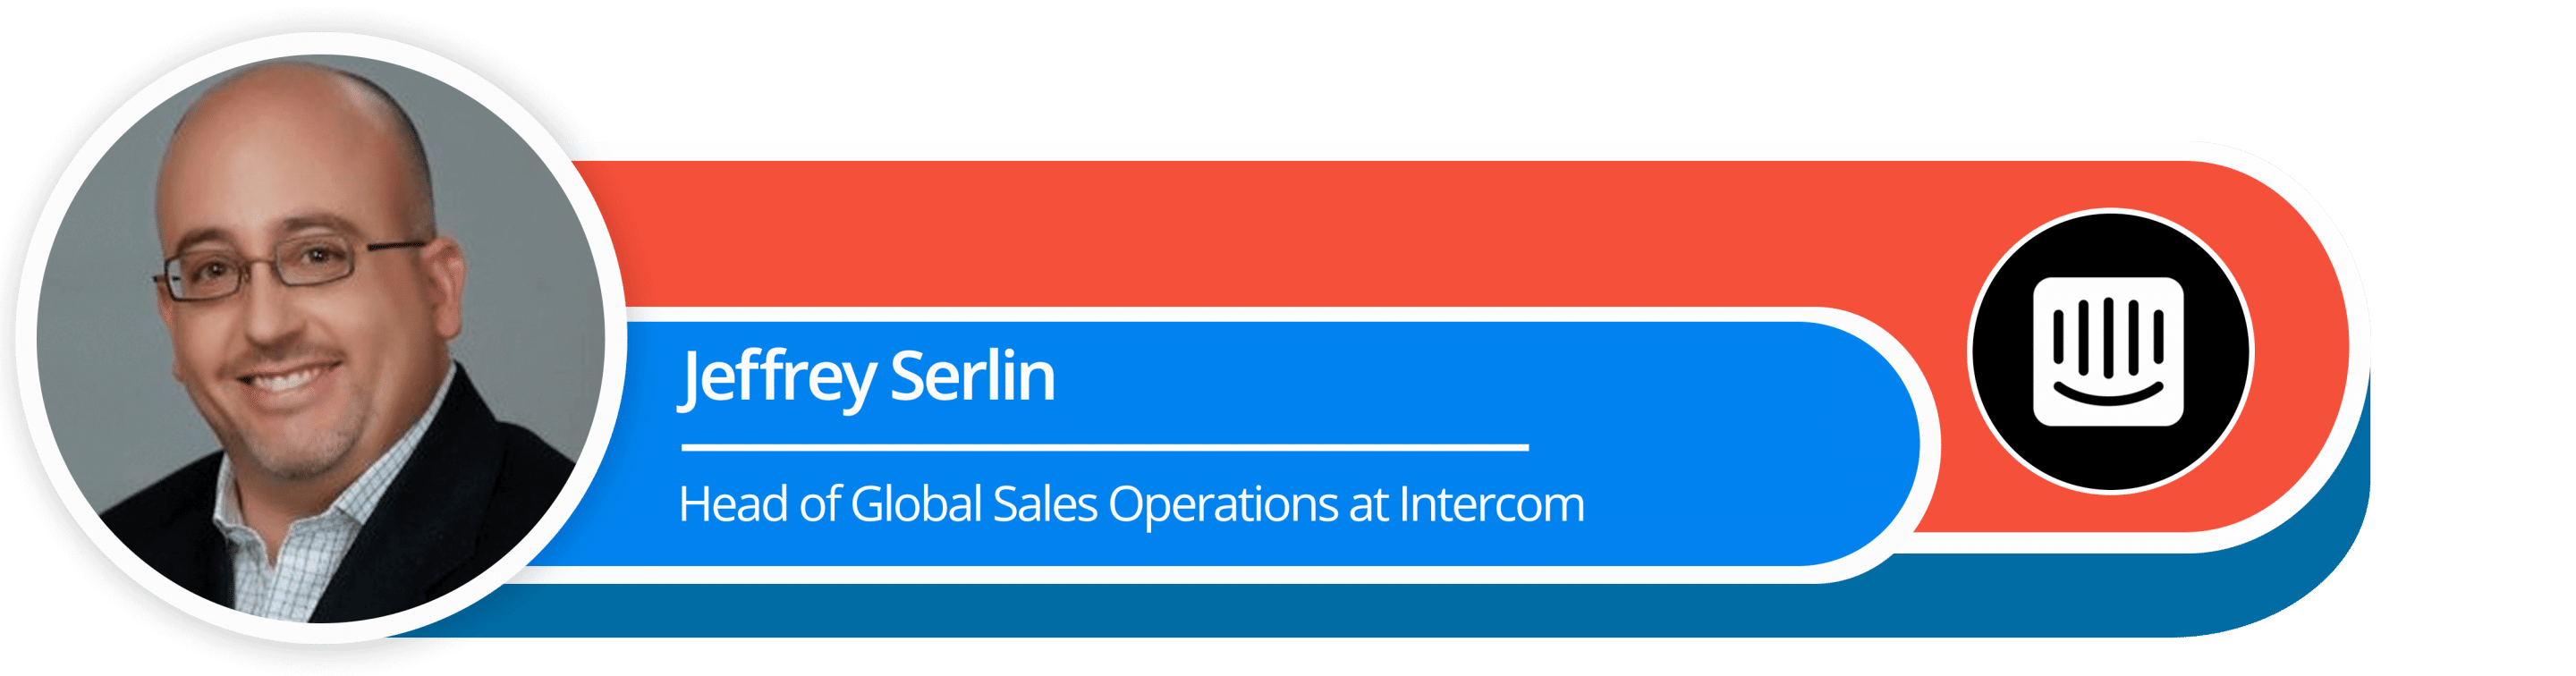 Jeffrey Serlin
Head of Global Sales Operations at Intercom